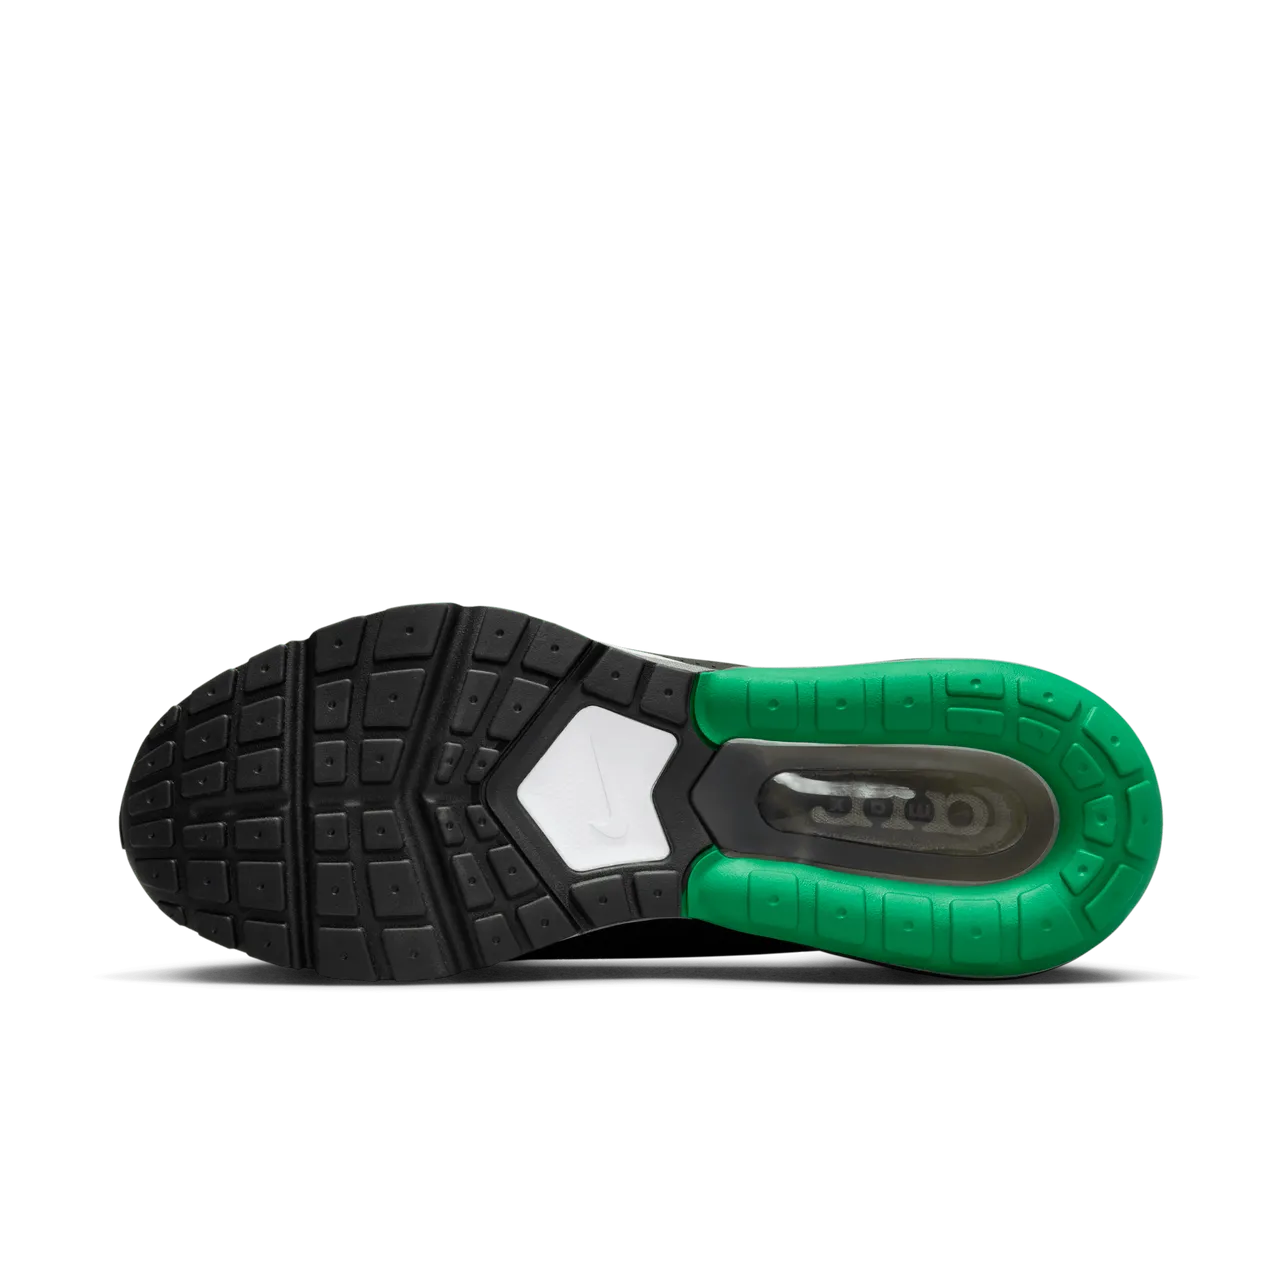 Nike Air Max Pulse Men's Shoes - Black